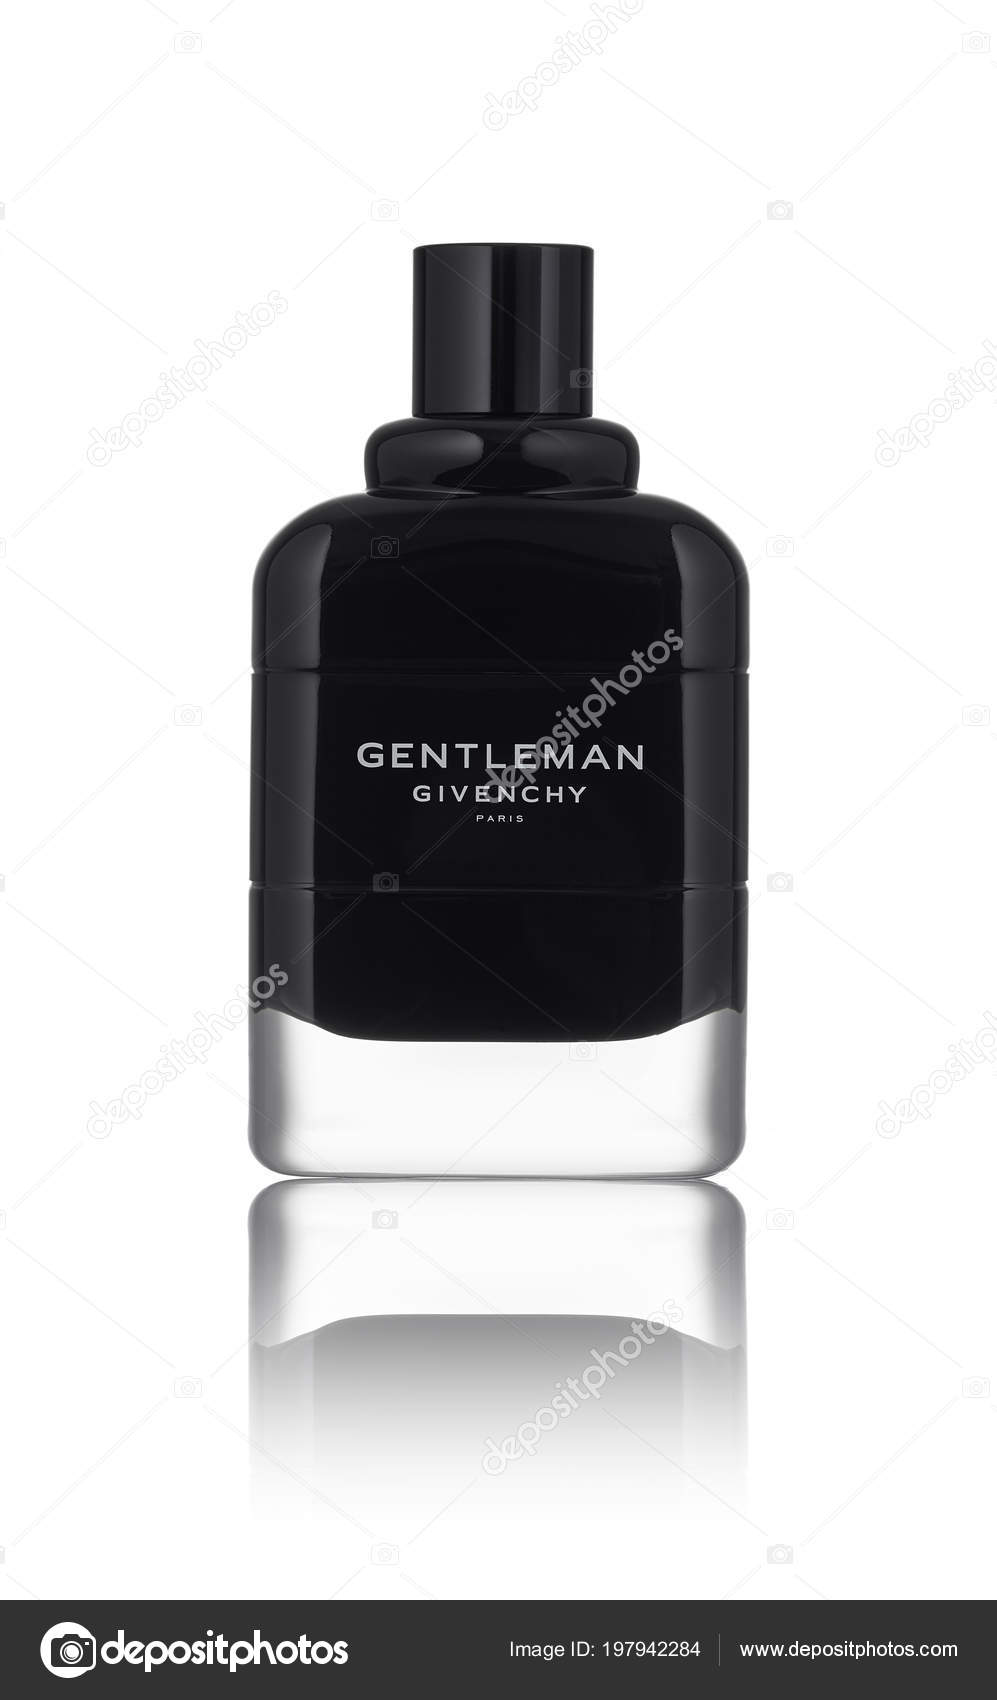 givenchy perfume 2018